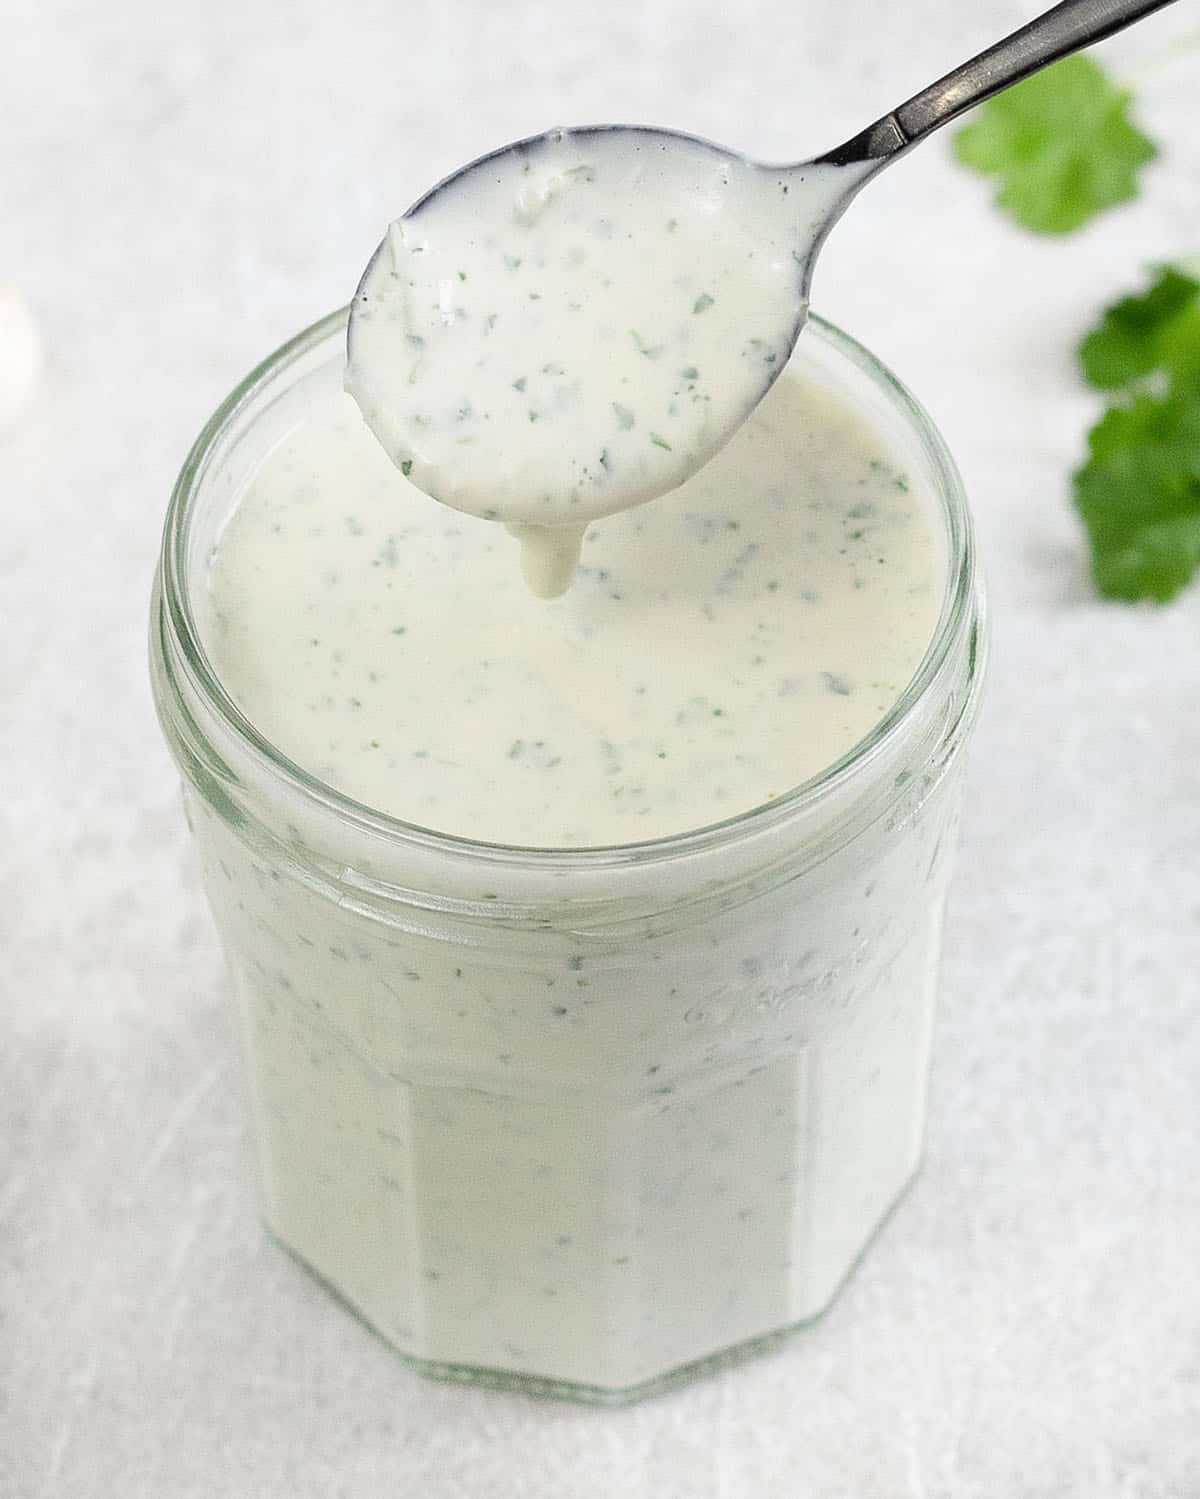 A spoonful of cilantro garlic sauce.